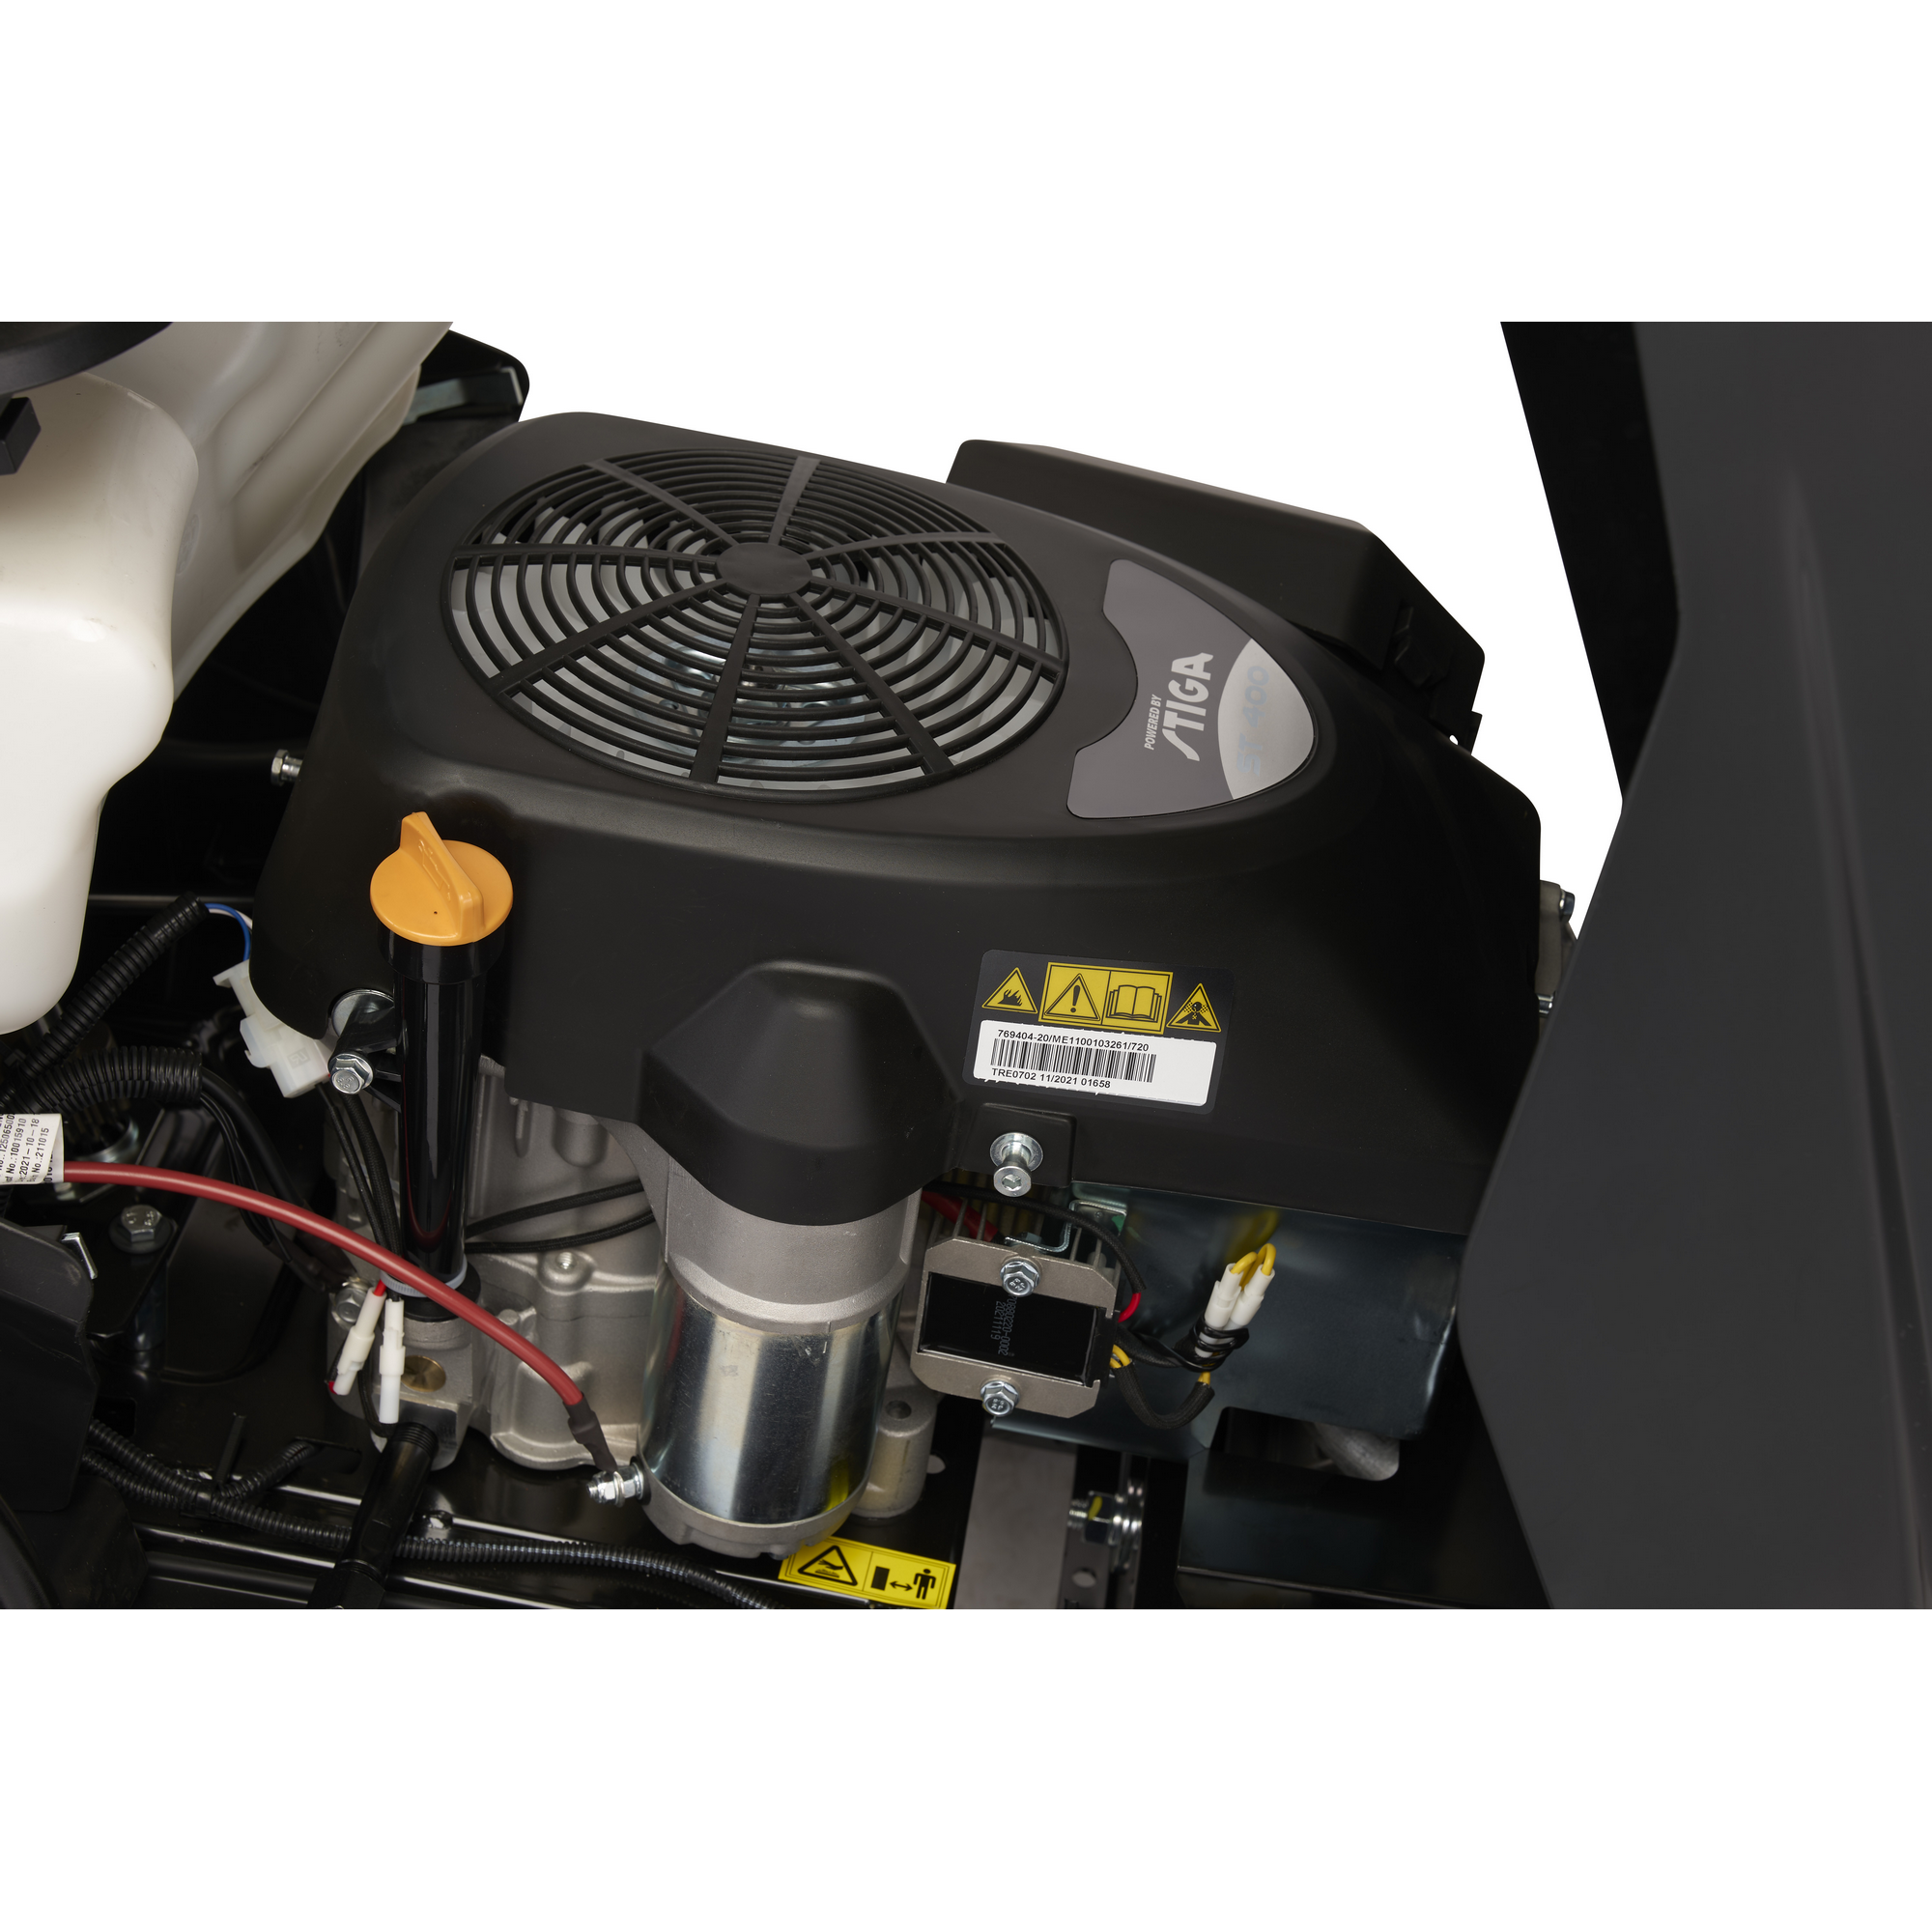 Rasentraktor 'AT3 98 HA' Hydrostatgetriebe, 98 cm Schnittbreite + product picture